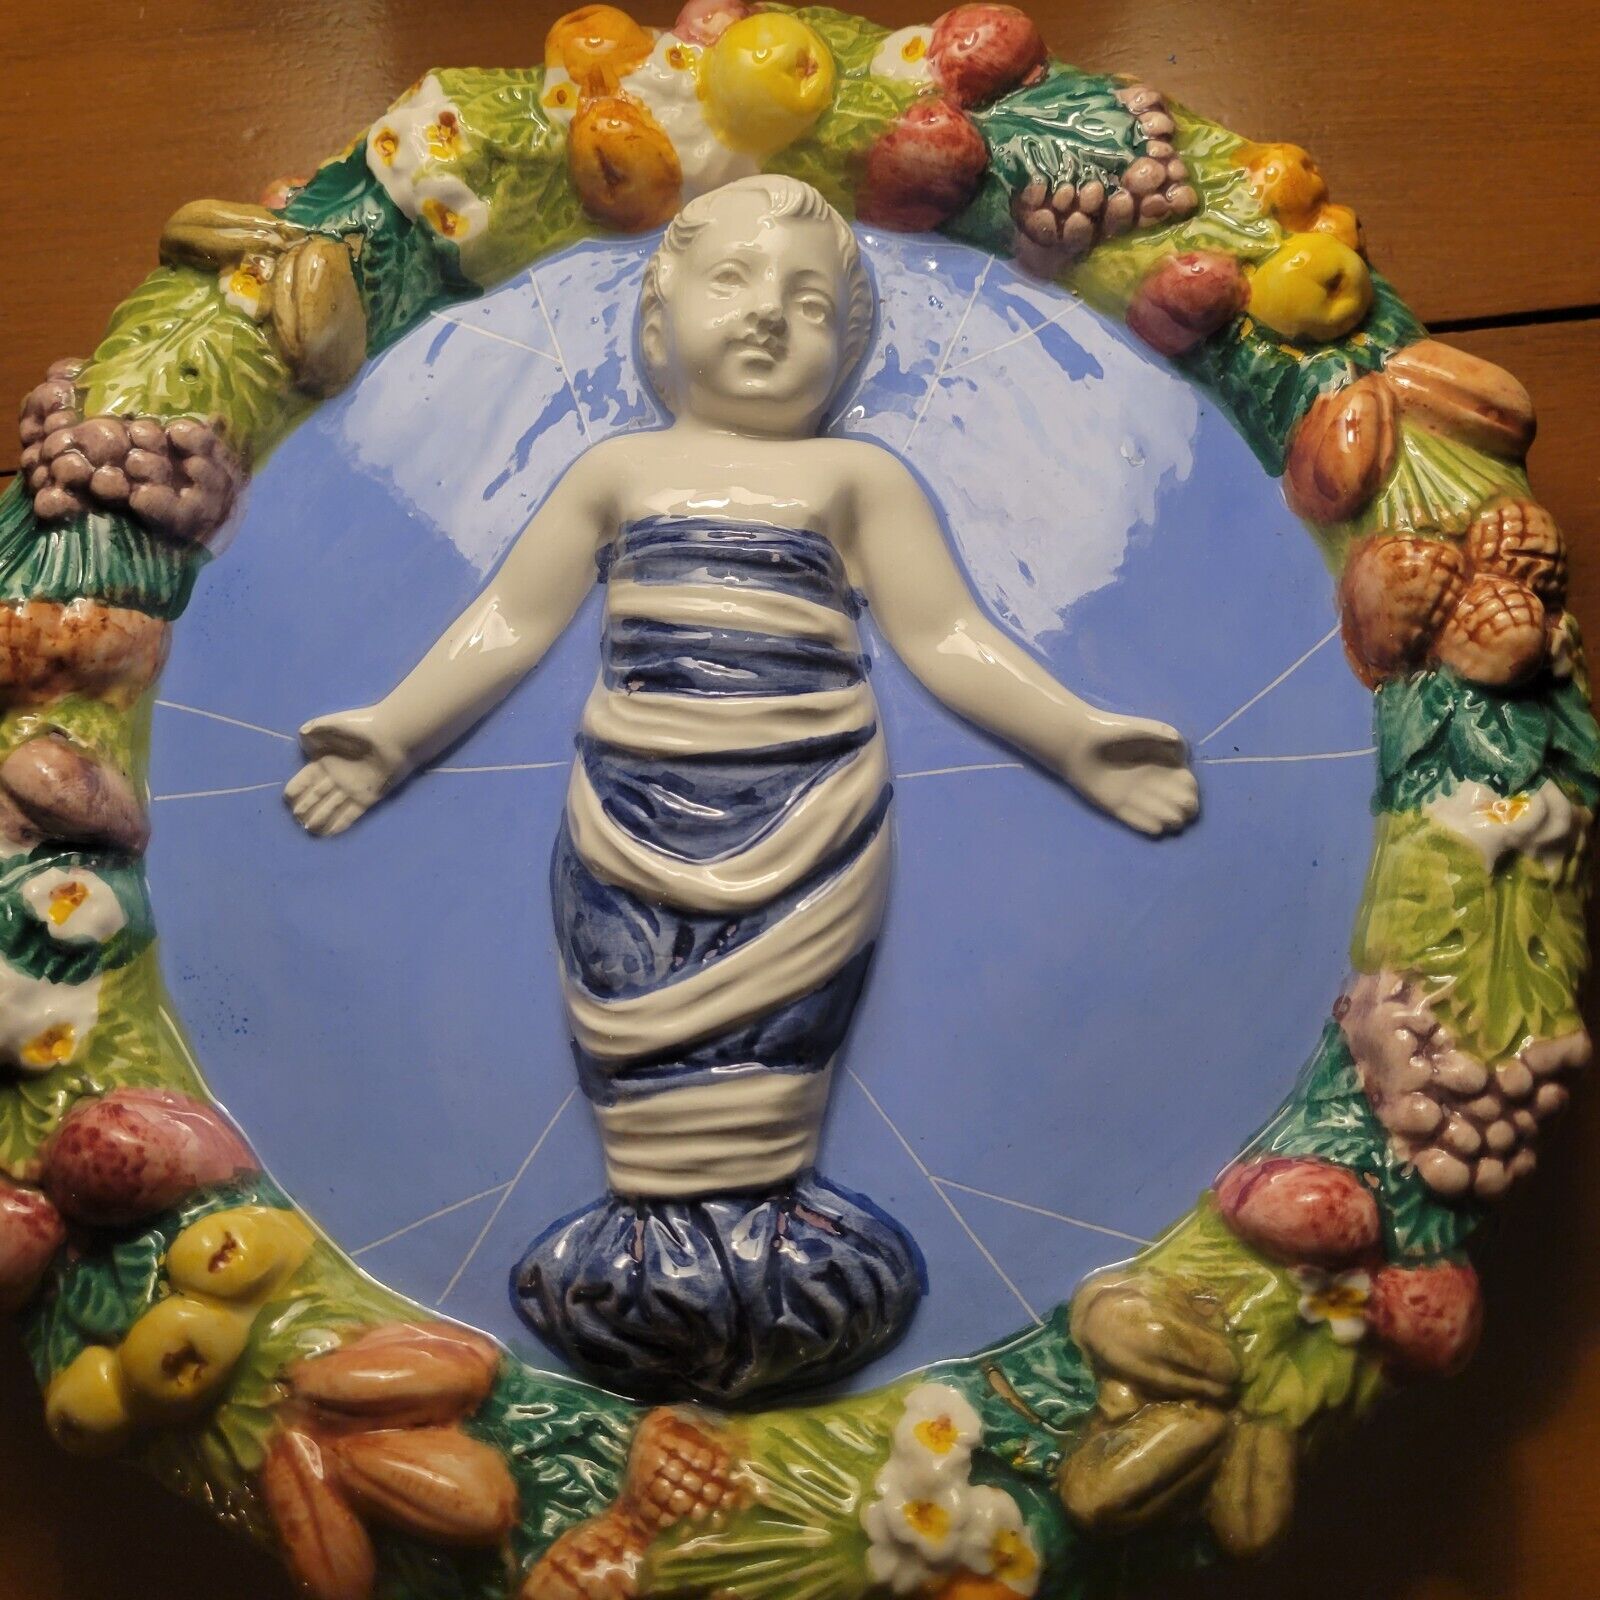 Antique Italian Ceramic Wall Plate with Cherub Design, Marked 228 